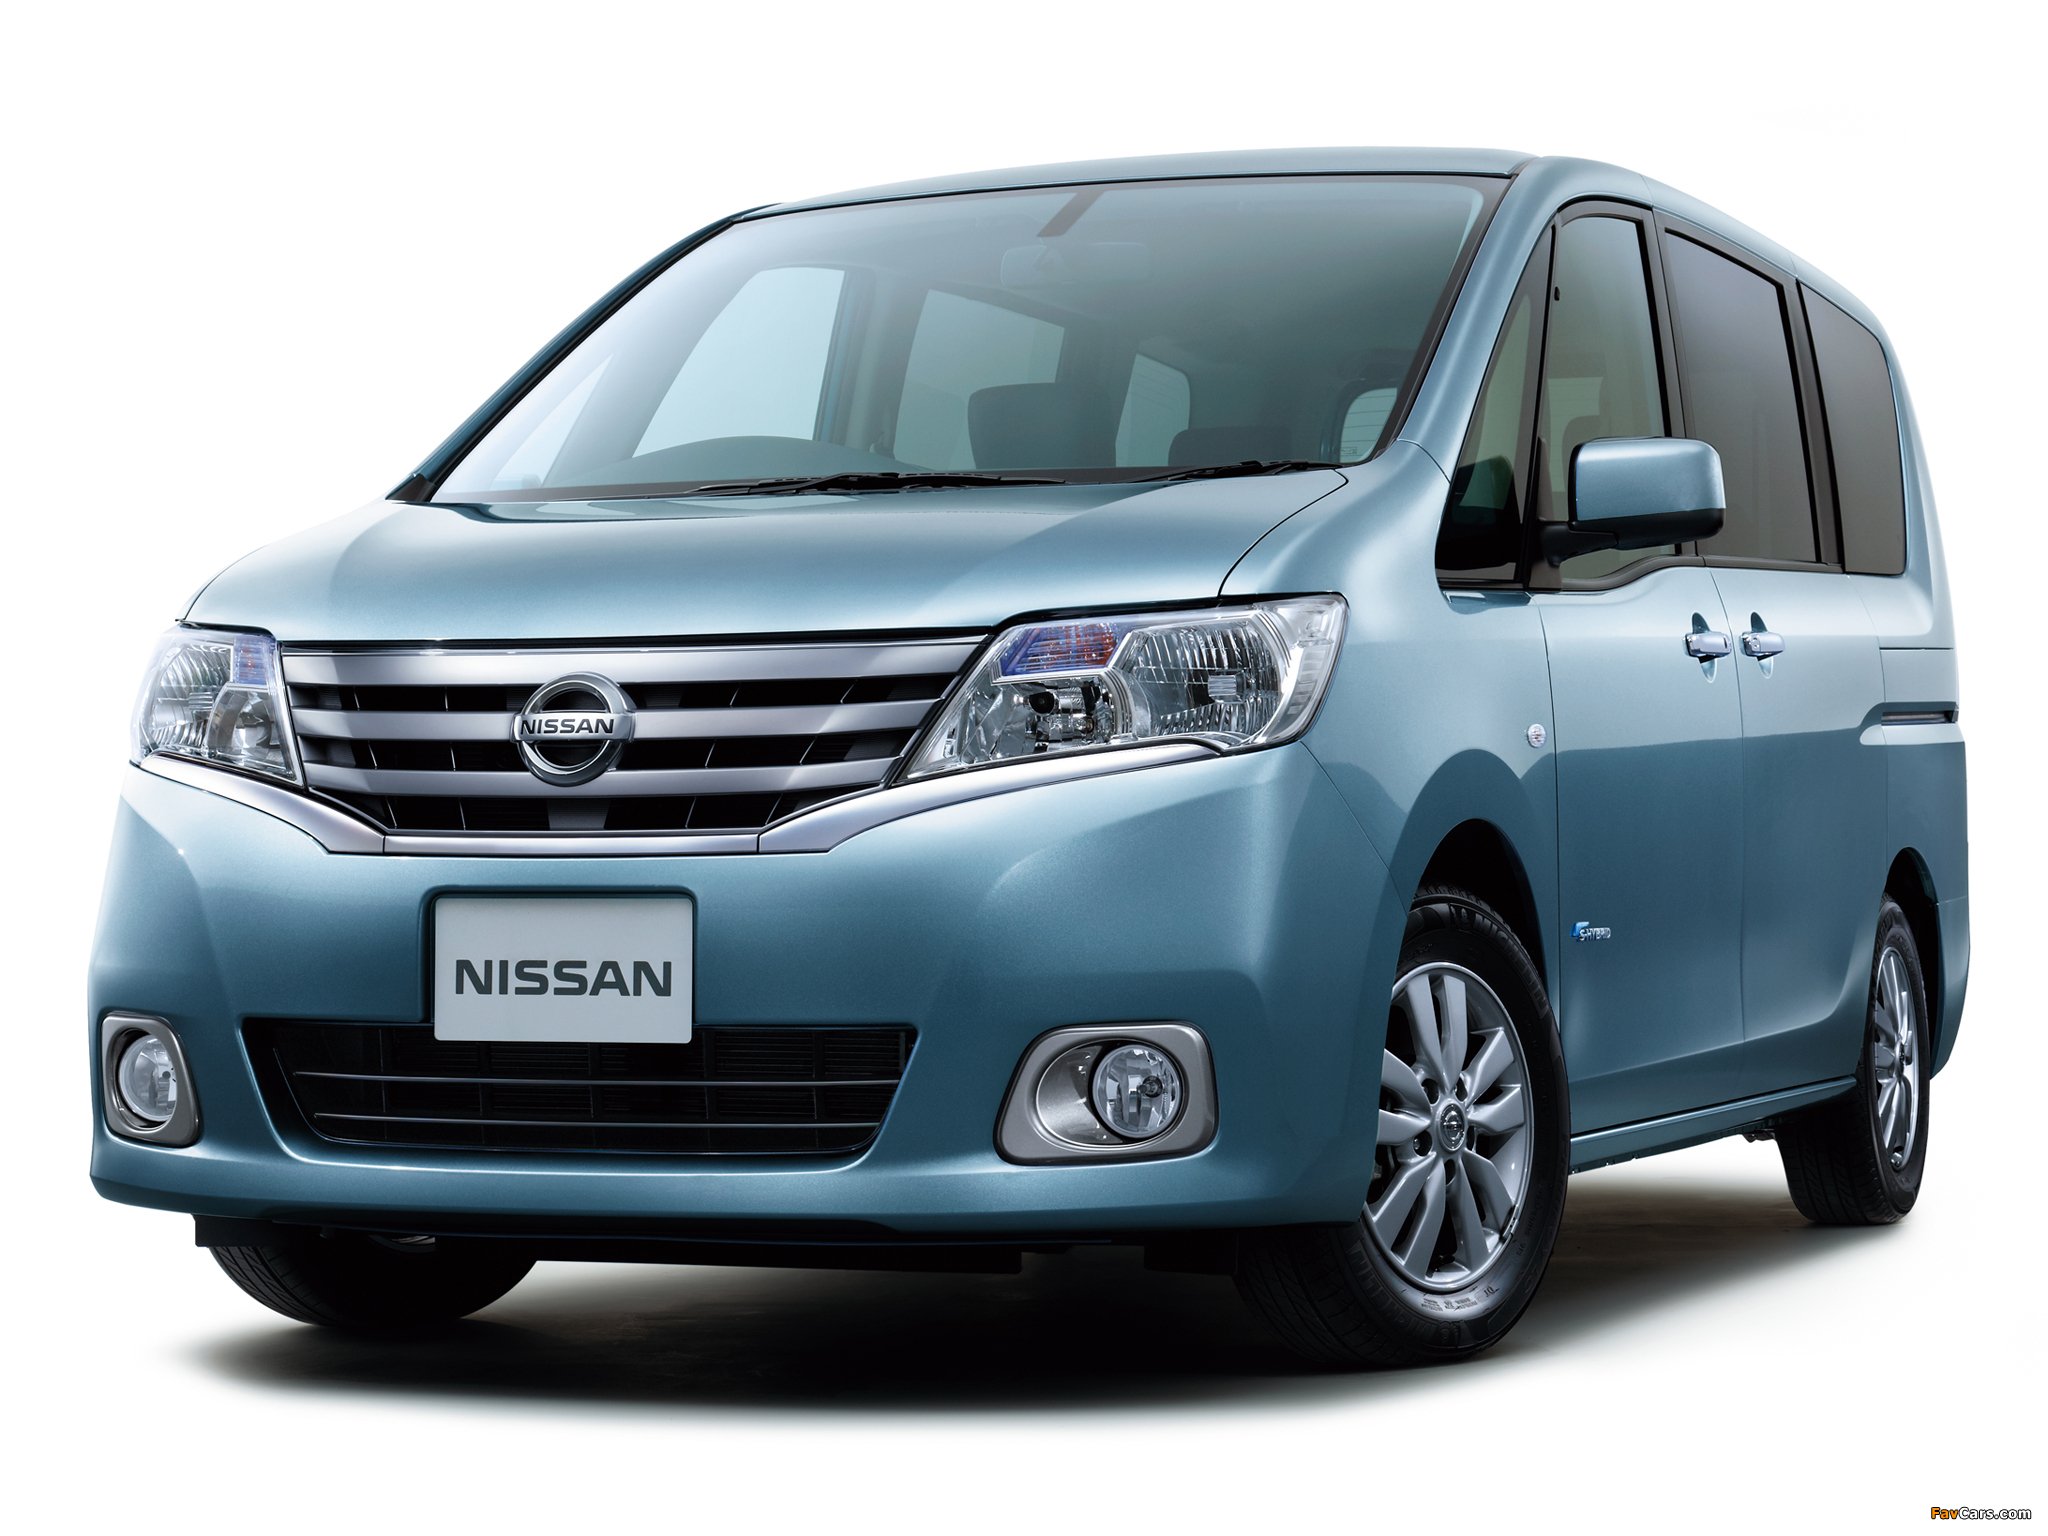 Nissan Serena 20G/20S S-Hybrid (C26) 2012 photos (2048 x 1536)